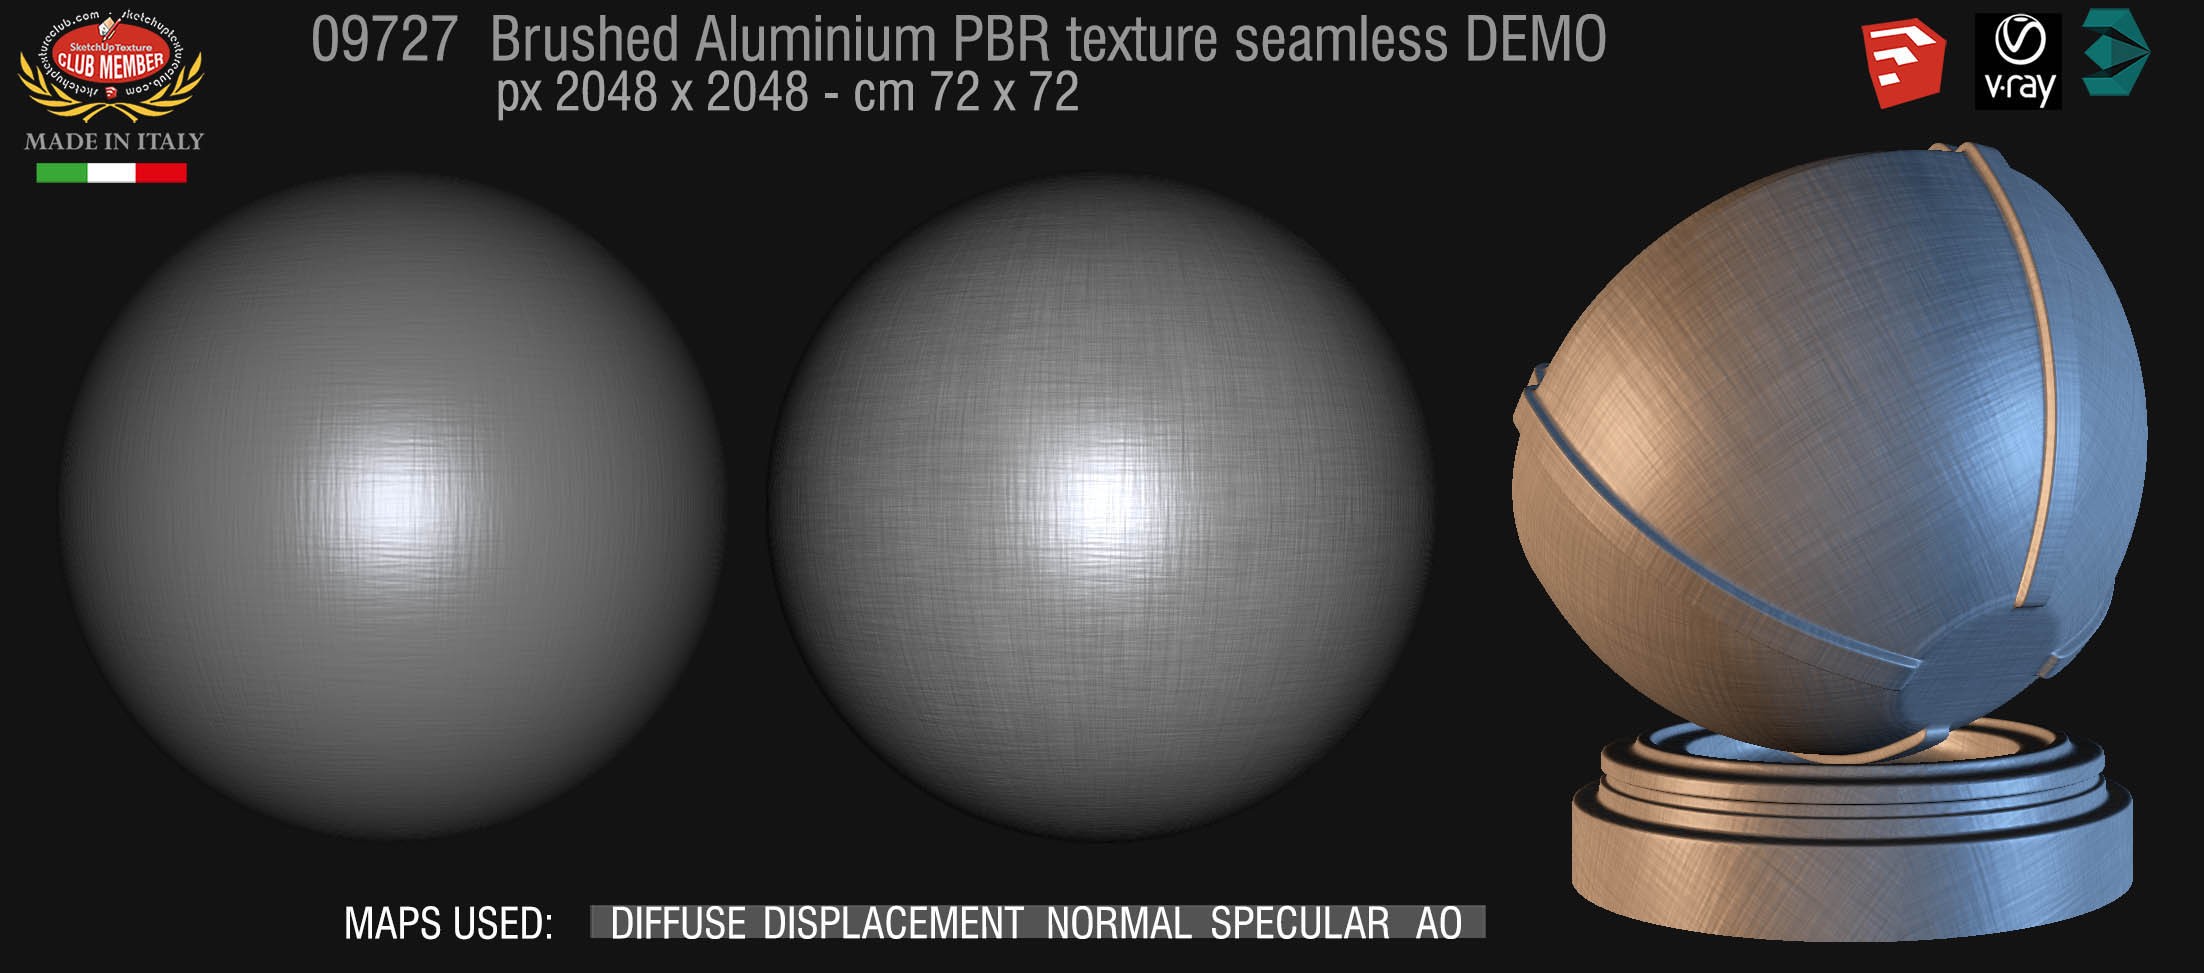 09727 Brushed aluminium PBR texture seamless DEMO